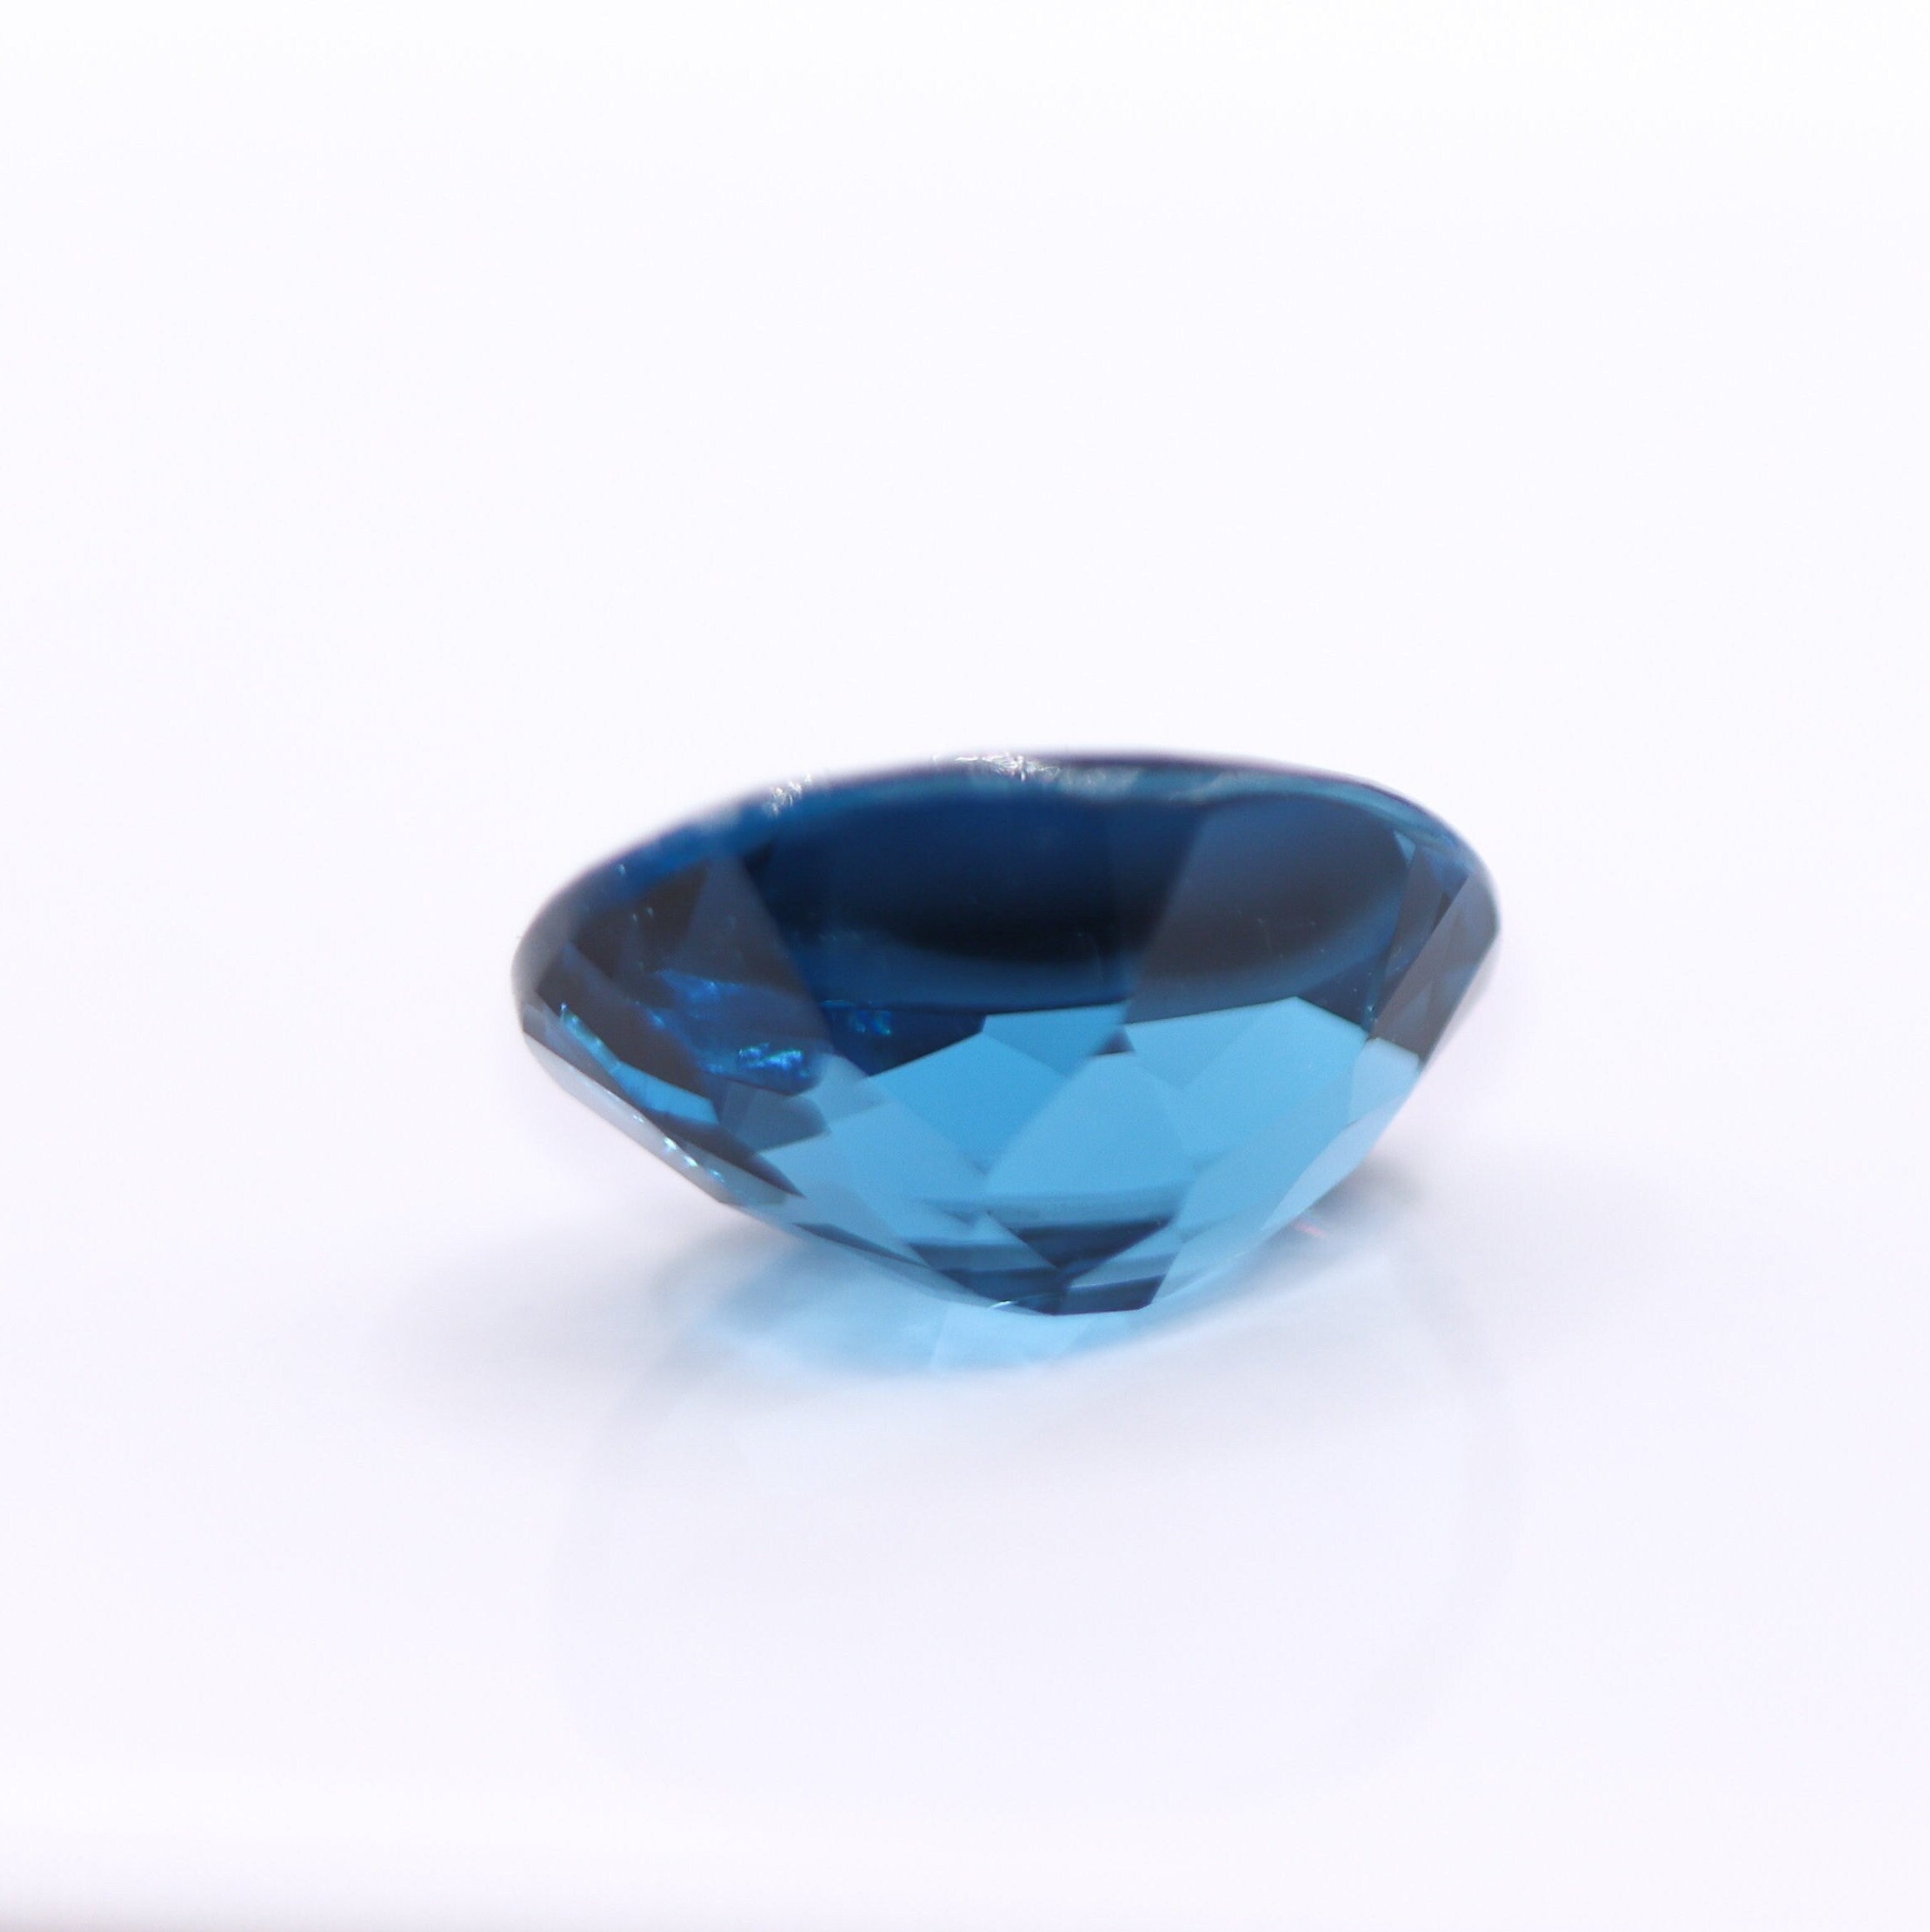 Gemstones-Beautiful London Blue Topaz Loose Gemstone || Oval Shape 16x12mm || Customizable || December Birthstone || - NNJGemstones